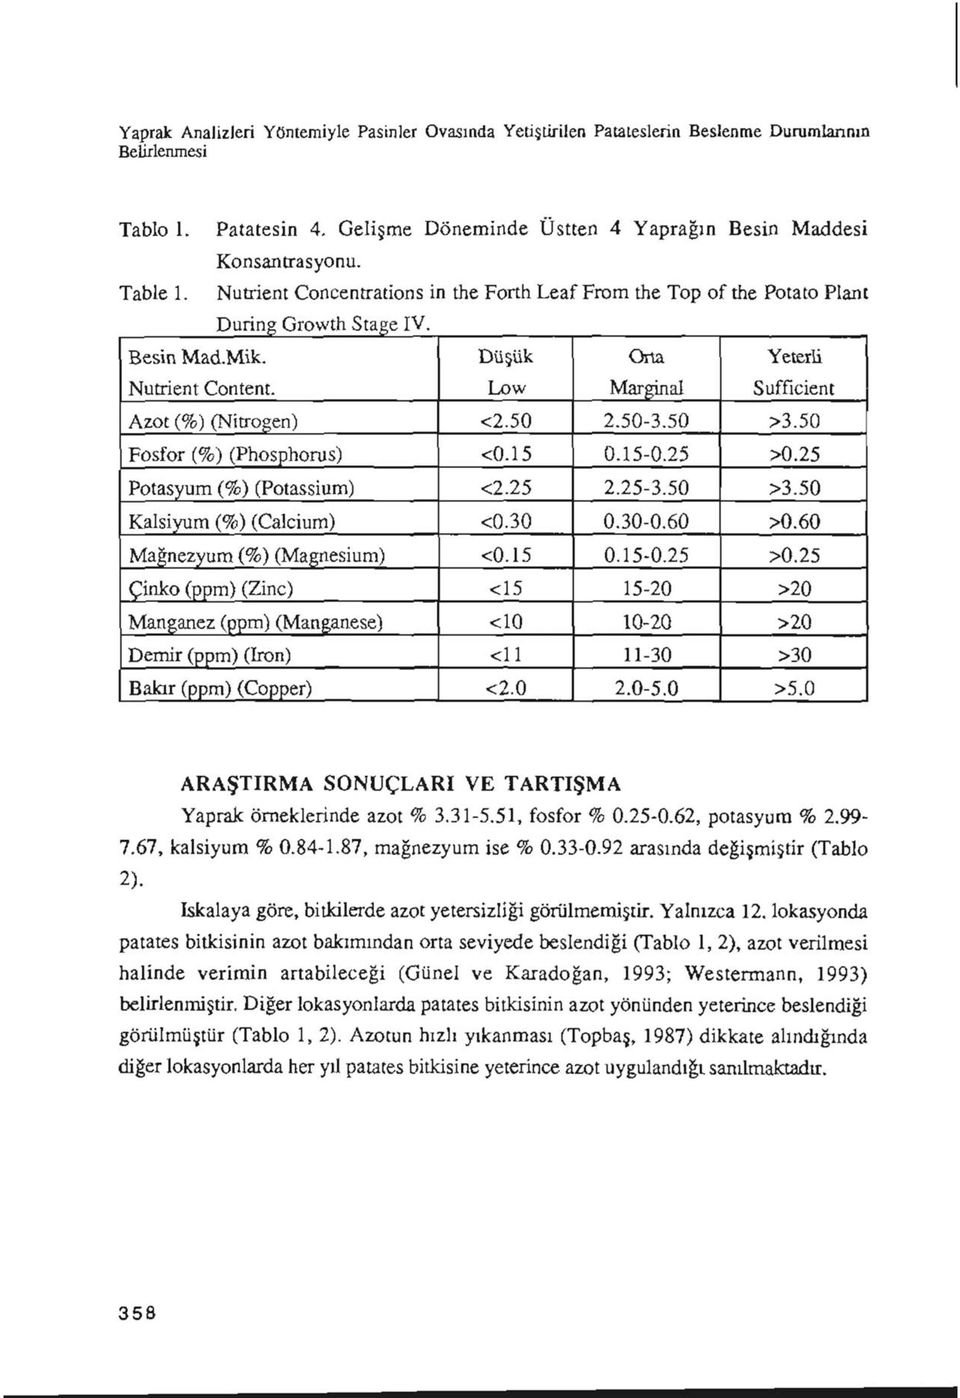 Düşük Low Orta Marginal Yeterli Suffıcient Azot (%) (Nitrogen) <2.50 2.50-3.50 >3.50 Fosfor (%) (Phosphorus) <0.15 0.15-0.25 >0.25 Potasyum (%) (Potassium) <2.25 2.25-3.50 >3.50 Kalsiyum (%) (Calcium) <0.